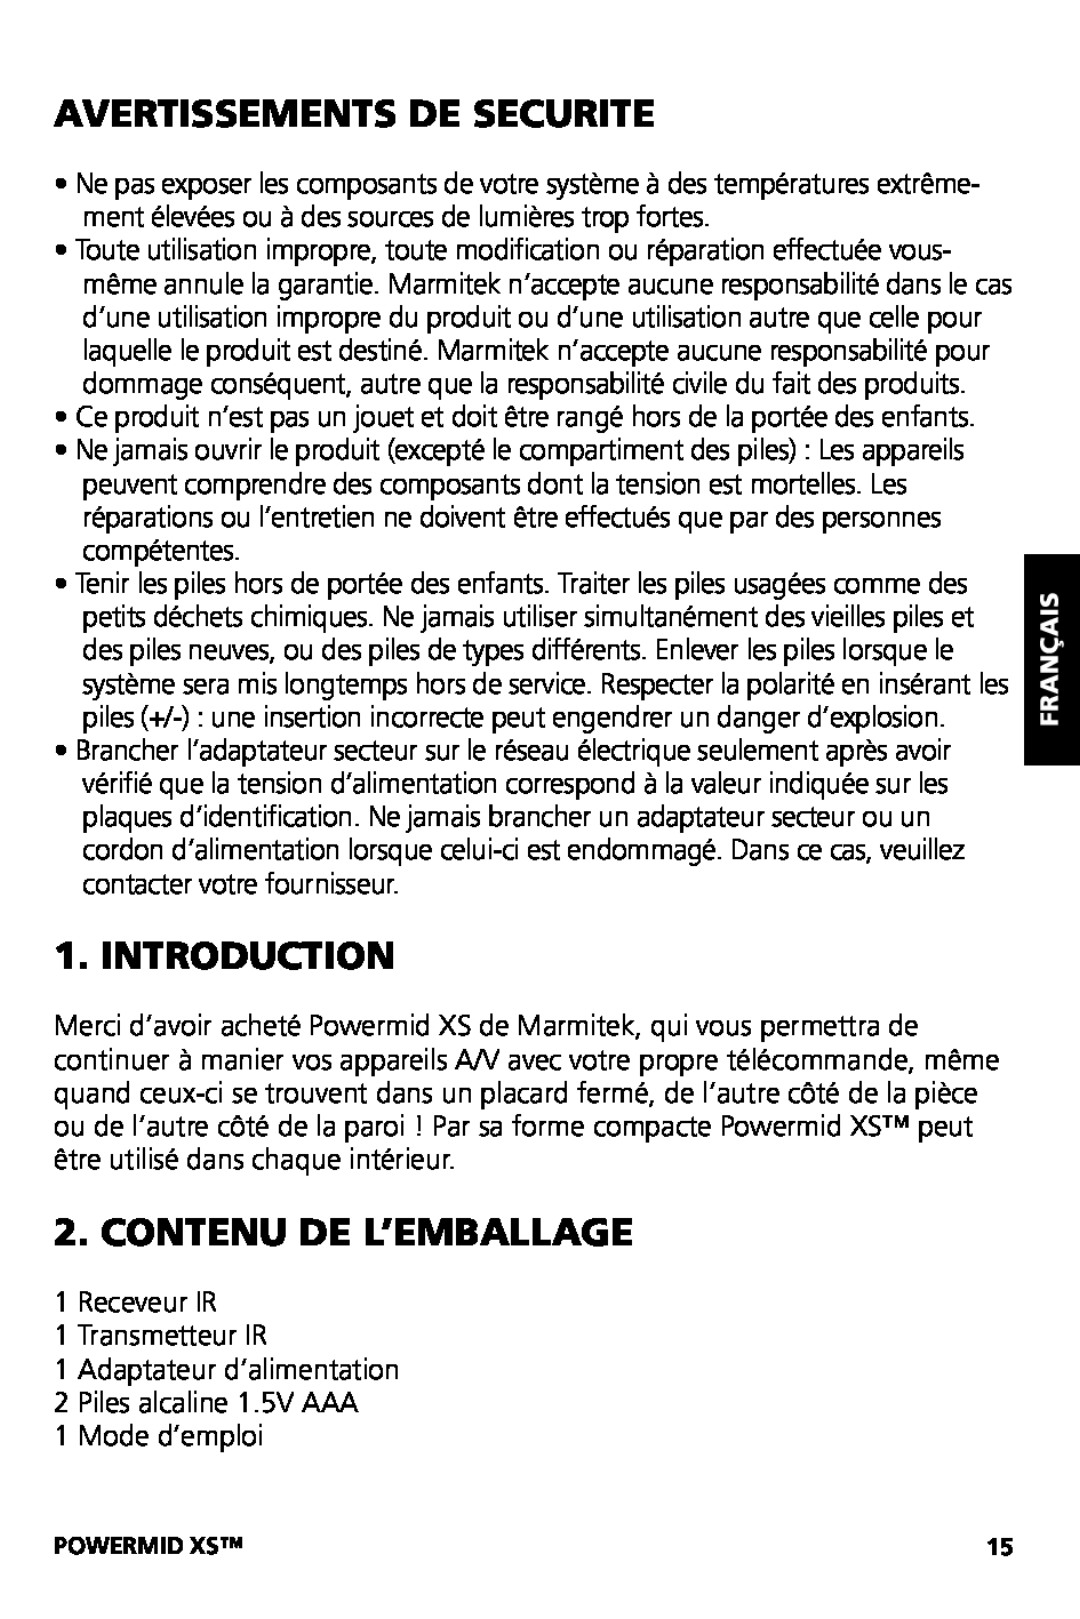 Marmitek XS user manual Avertissements De Securite, Contenu De L’Emballage, Introduction 